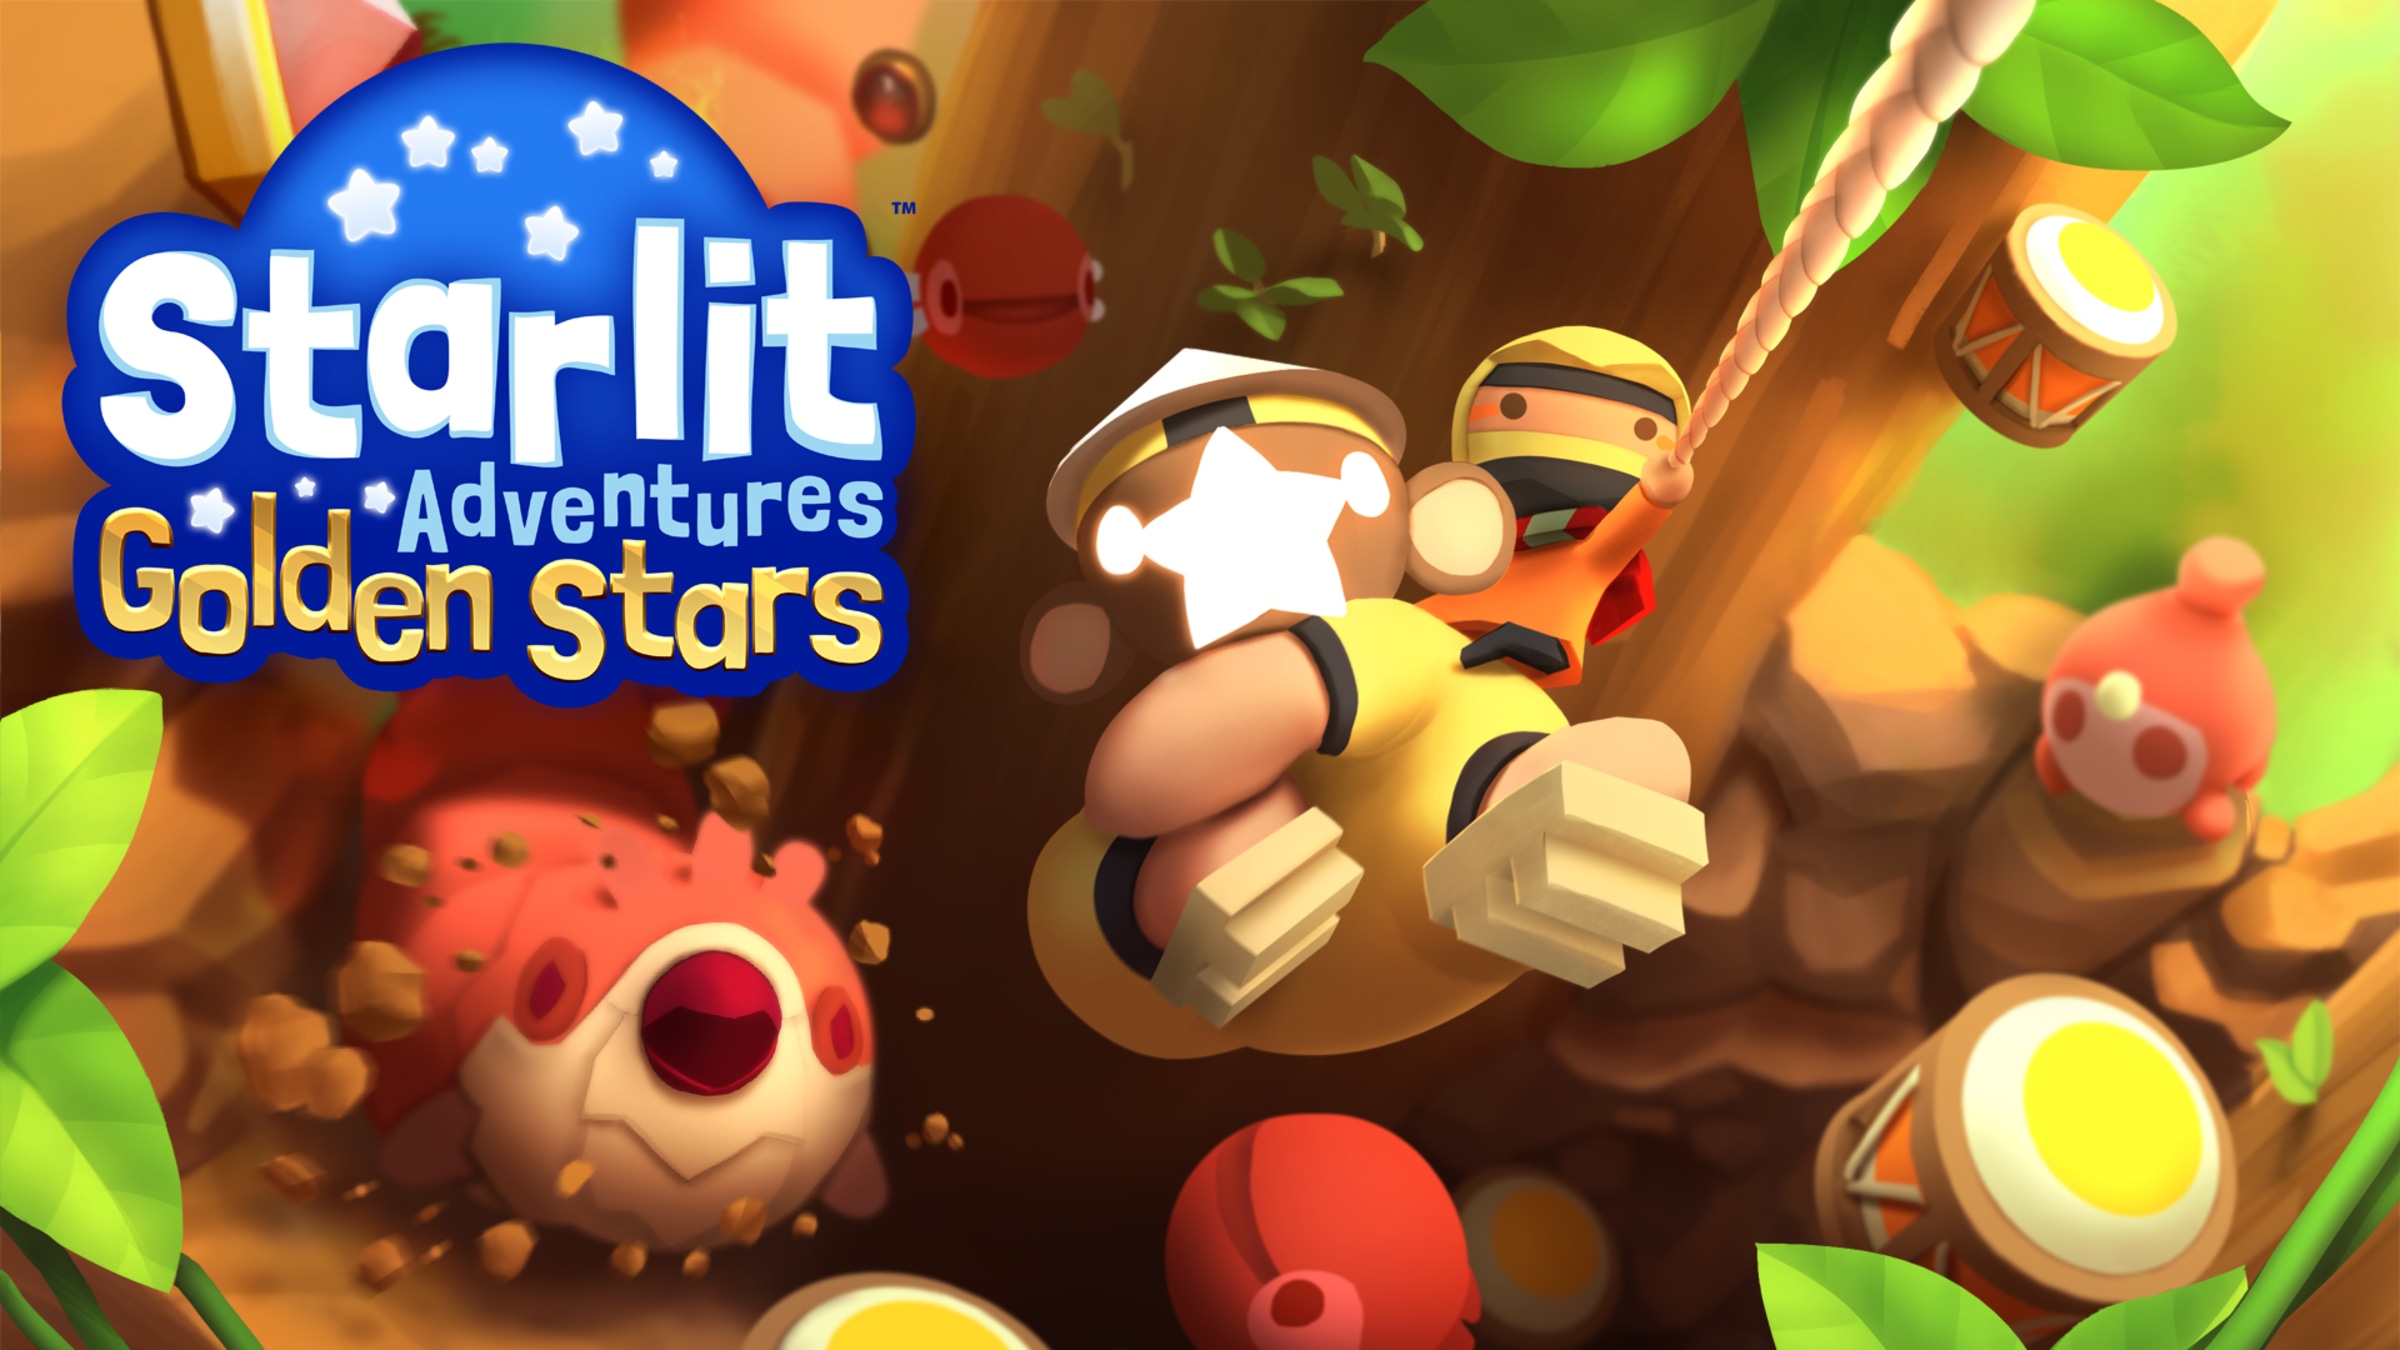 Starlit Adventures Golden Stars For Nintendo Switch - Nintendo Official Site